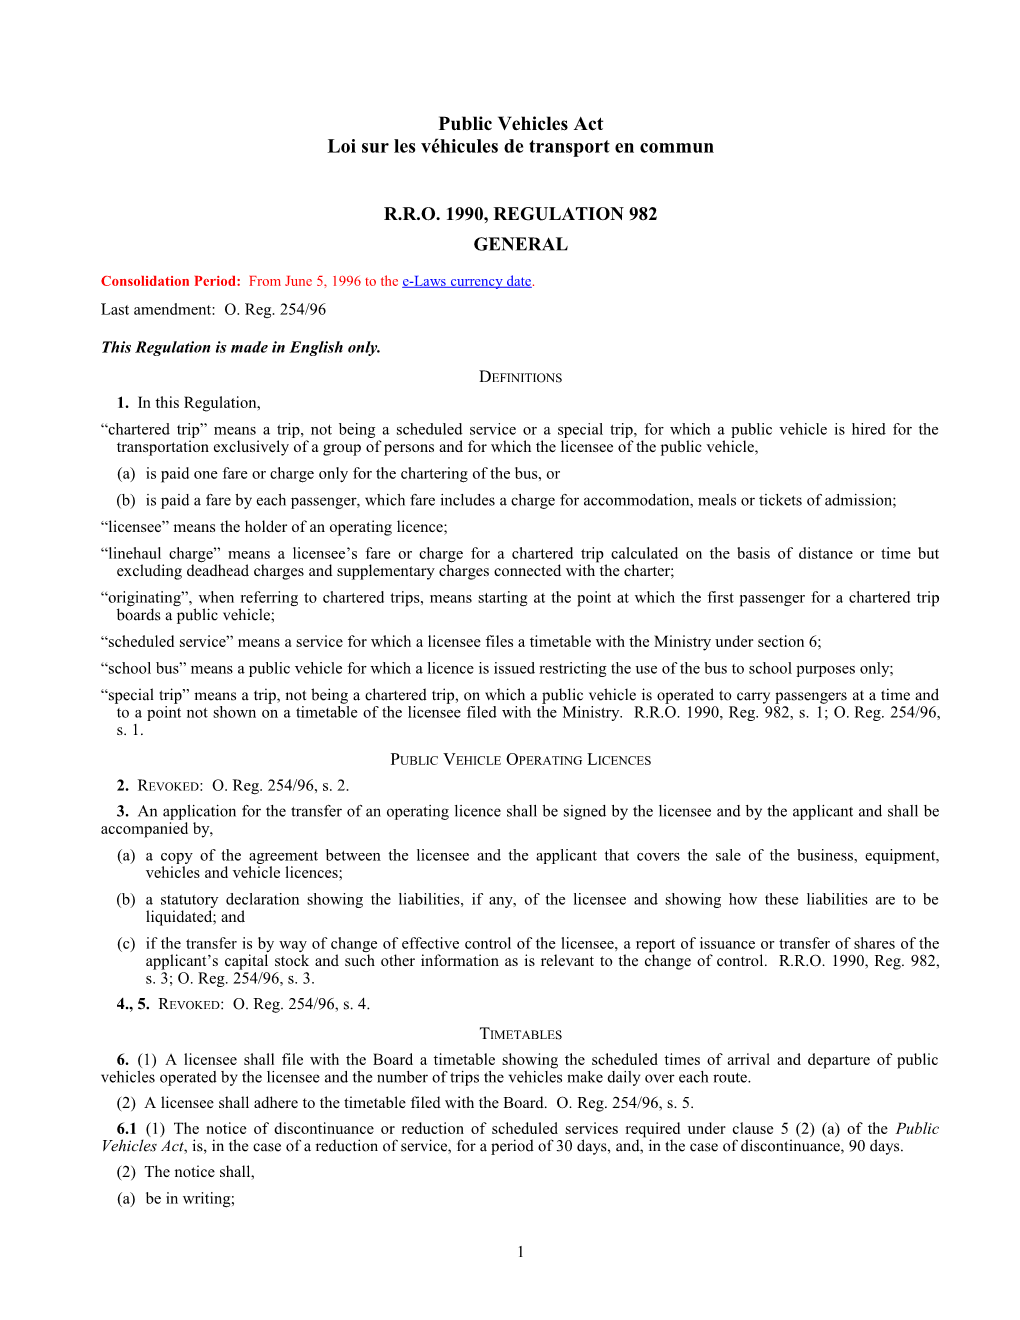 Public Vehicles Act - R.R.O. 1990, Reg. 982